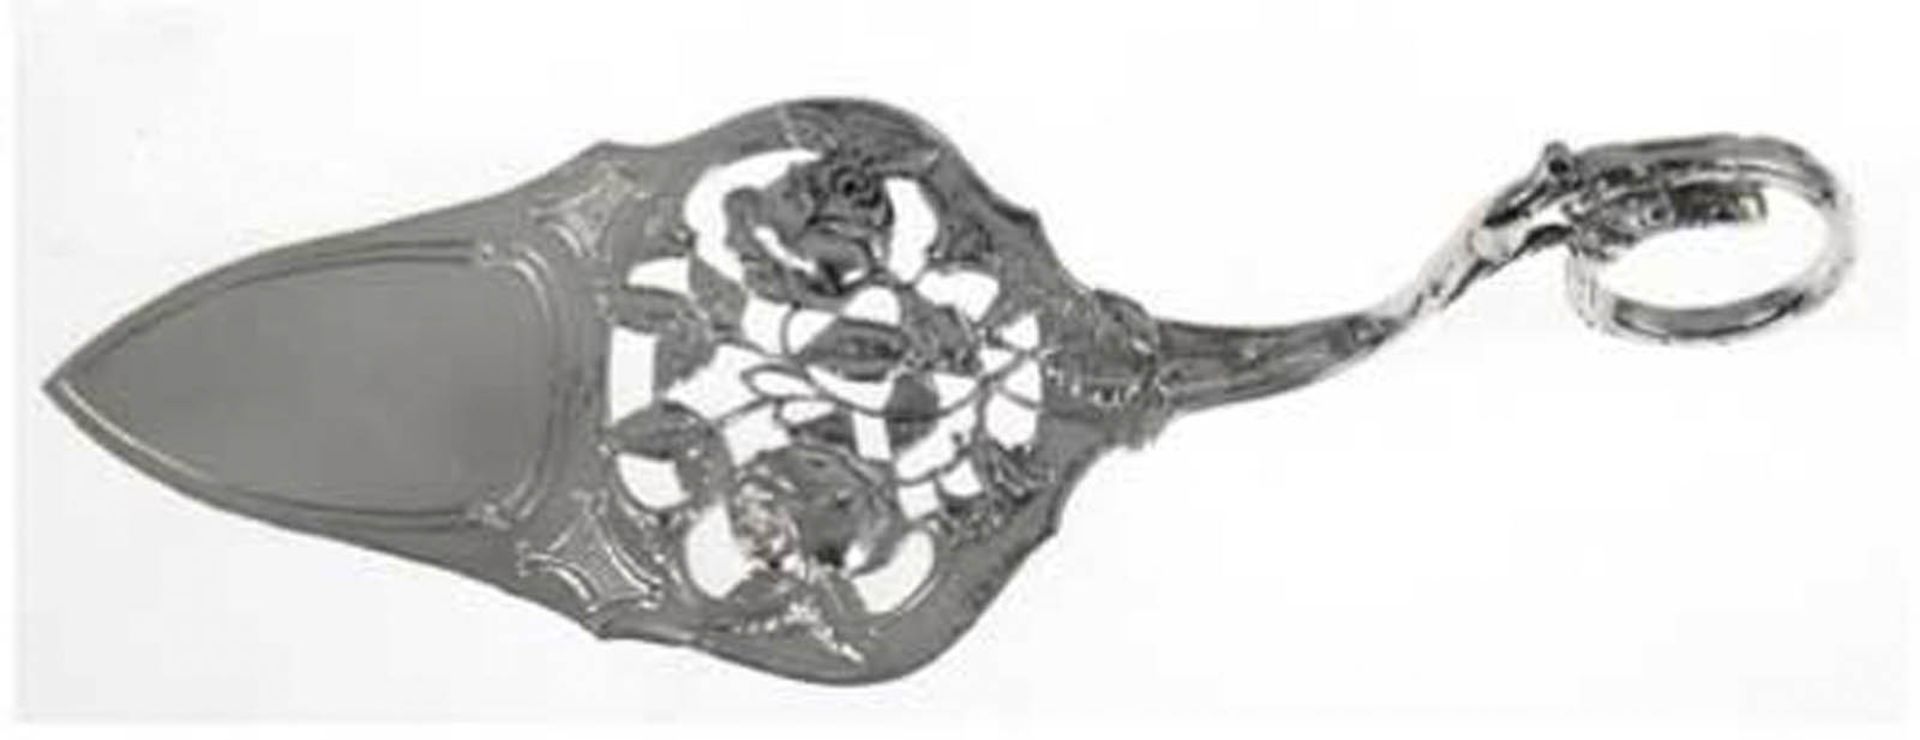 Gebäckheber, 800er Silber, punziert, ca. 51 g, durchbrochener Rosendekor, L. 18 cm